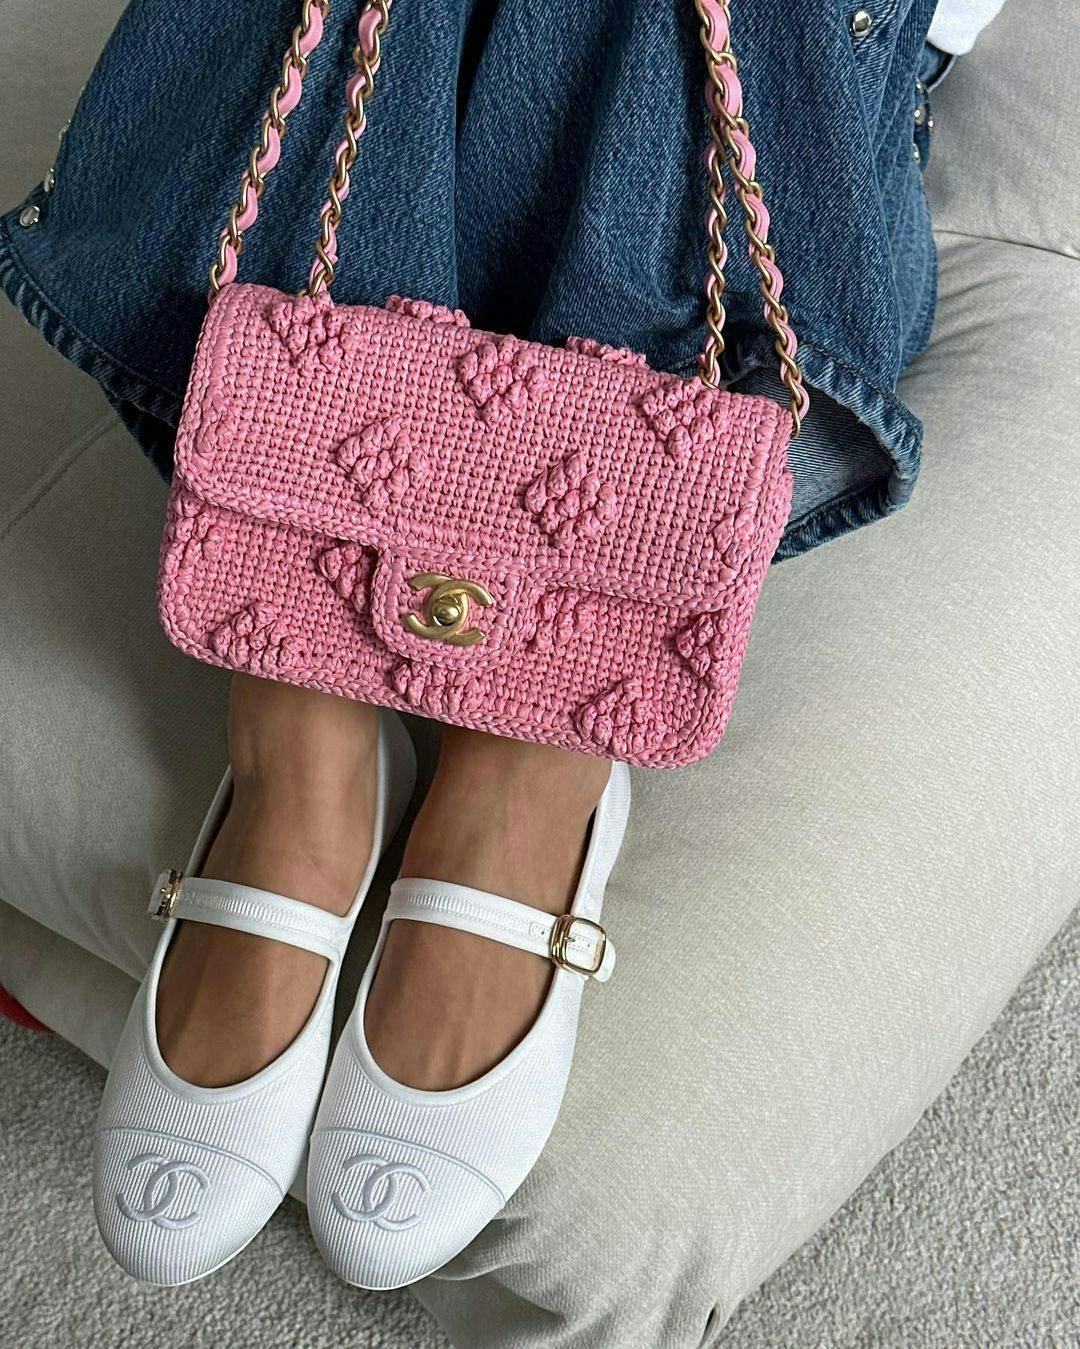 accessories bag handbag purse clothing footwear sandal